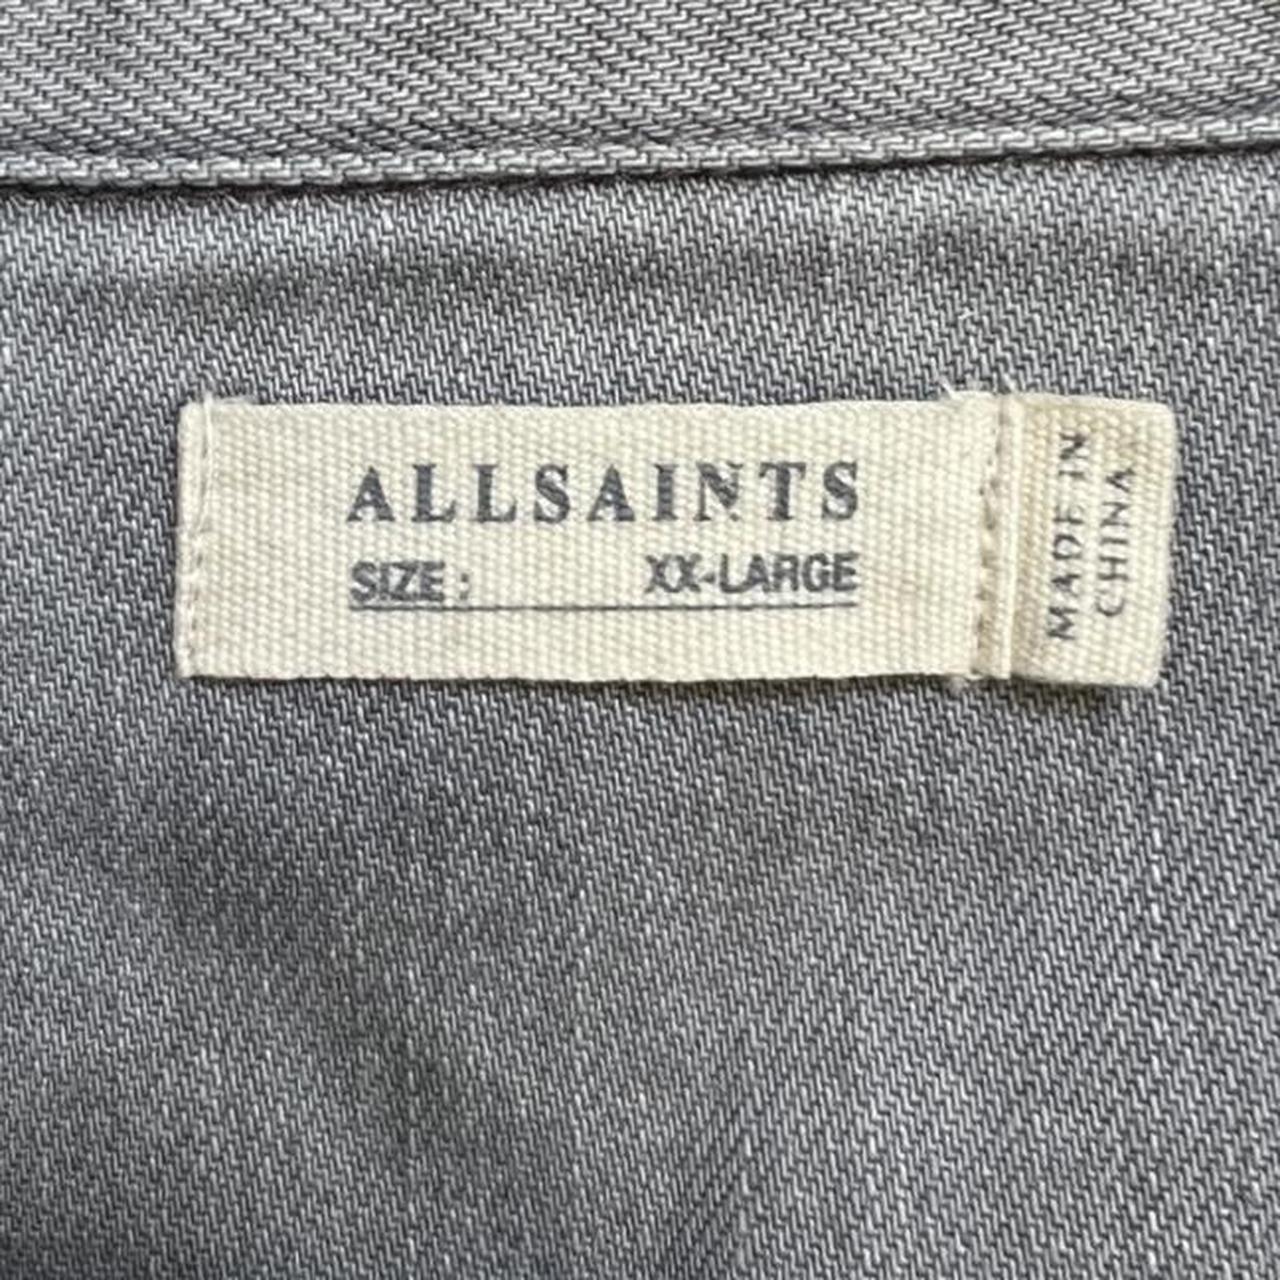 AllSaints Men's Jacket | Depop